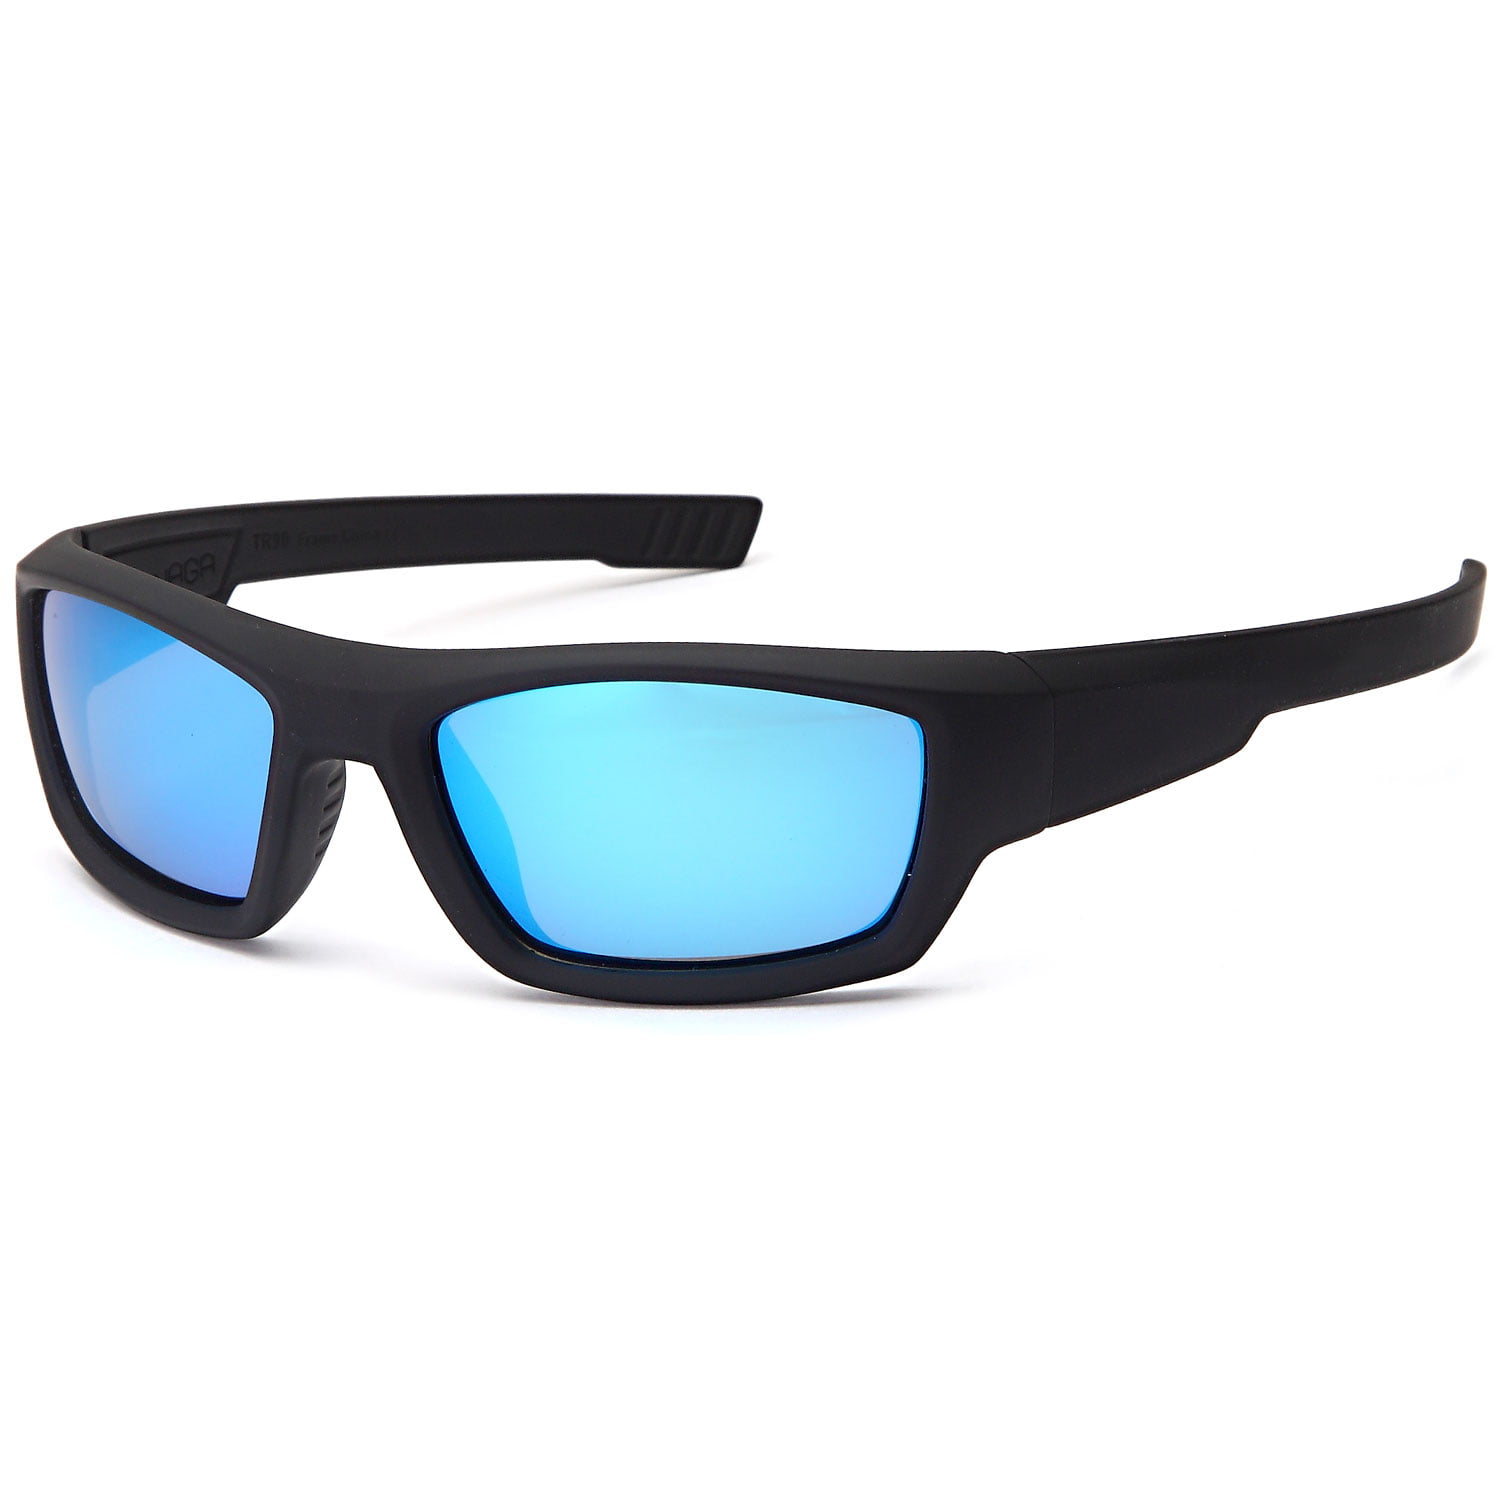 Kids Sport Sunglasses Great for Baseball Polarized Glare Blocking & lightweight